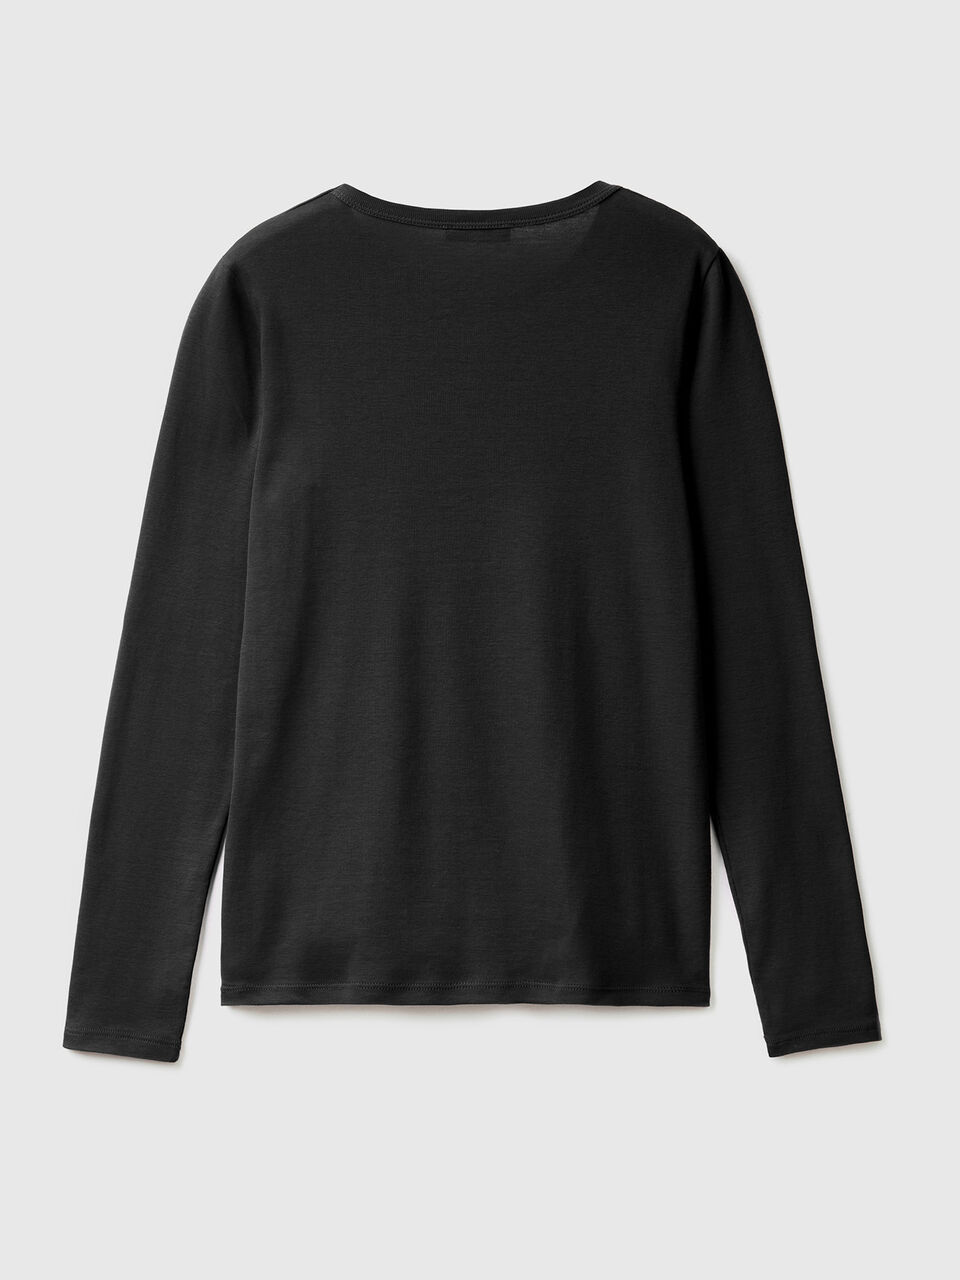 | sleeve long Benetton t-shirt Black cotton 100% - Black